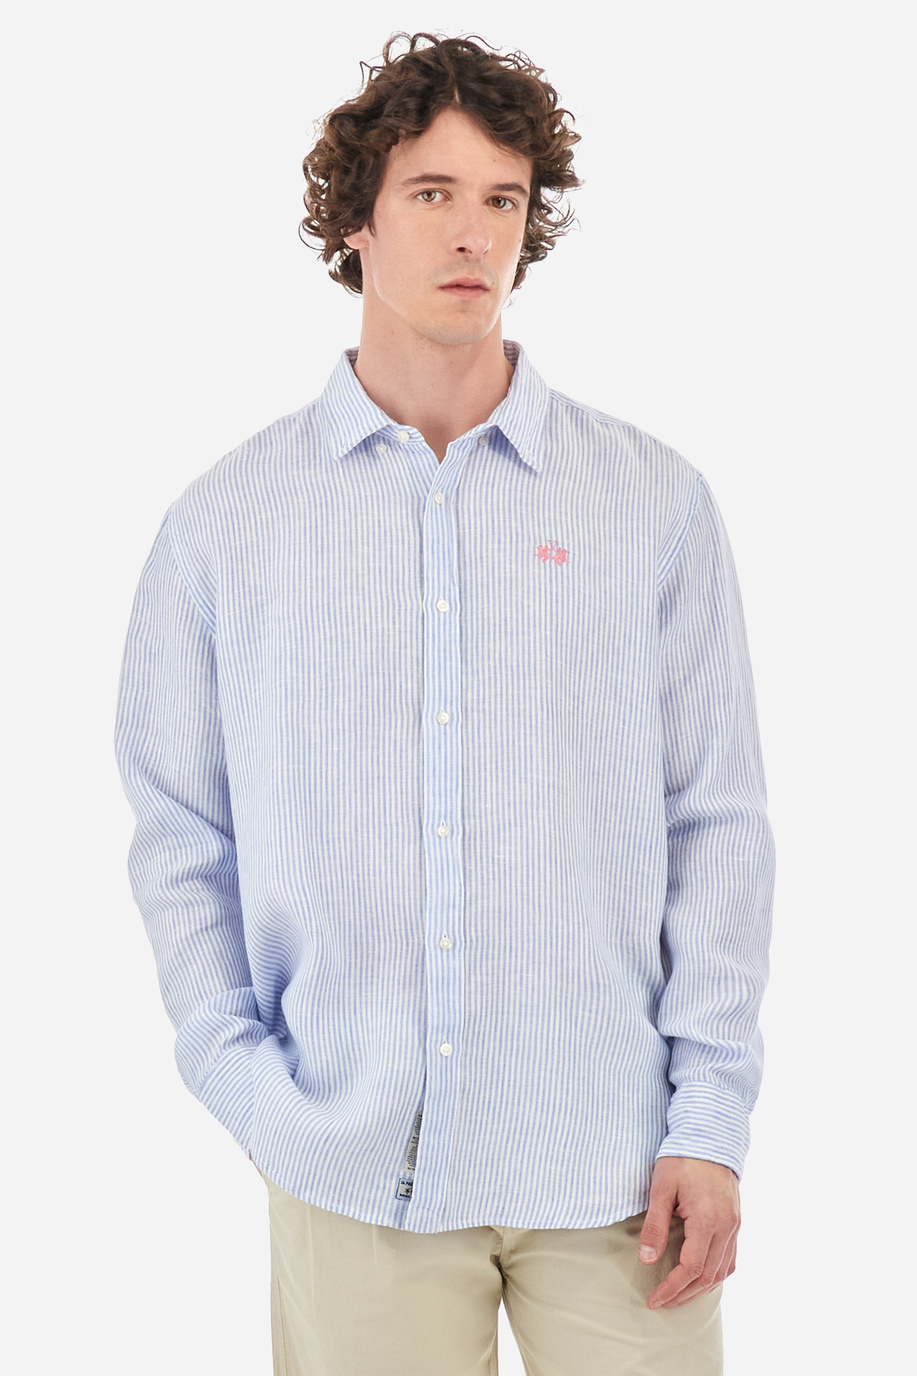 Cotton shirt with a striped pprint - Rodolfo - XLarge sizes | La Martina - Official Online Shop